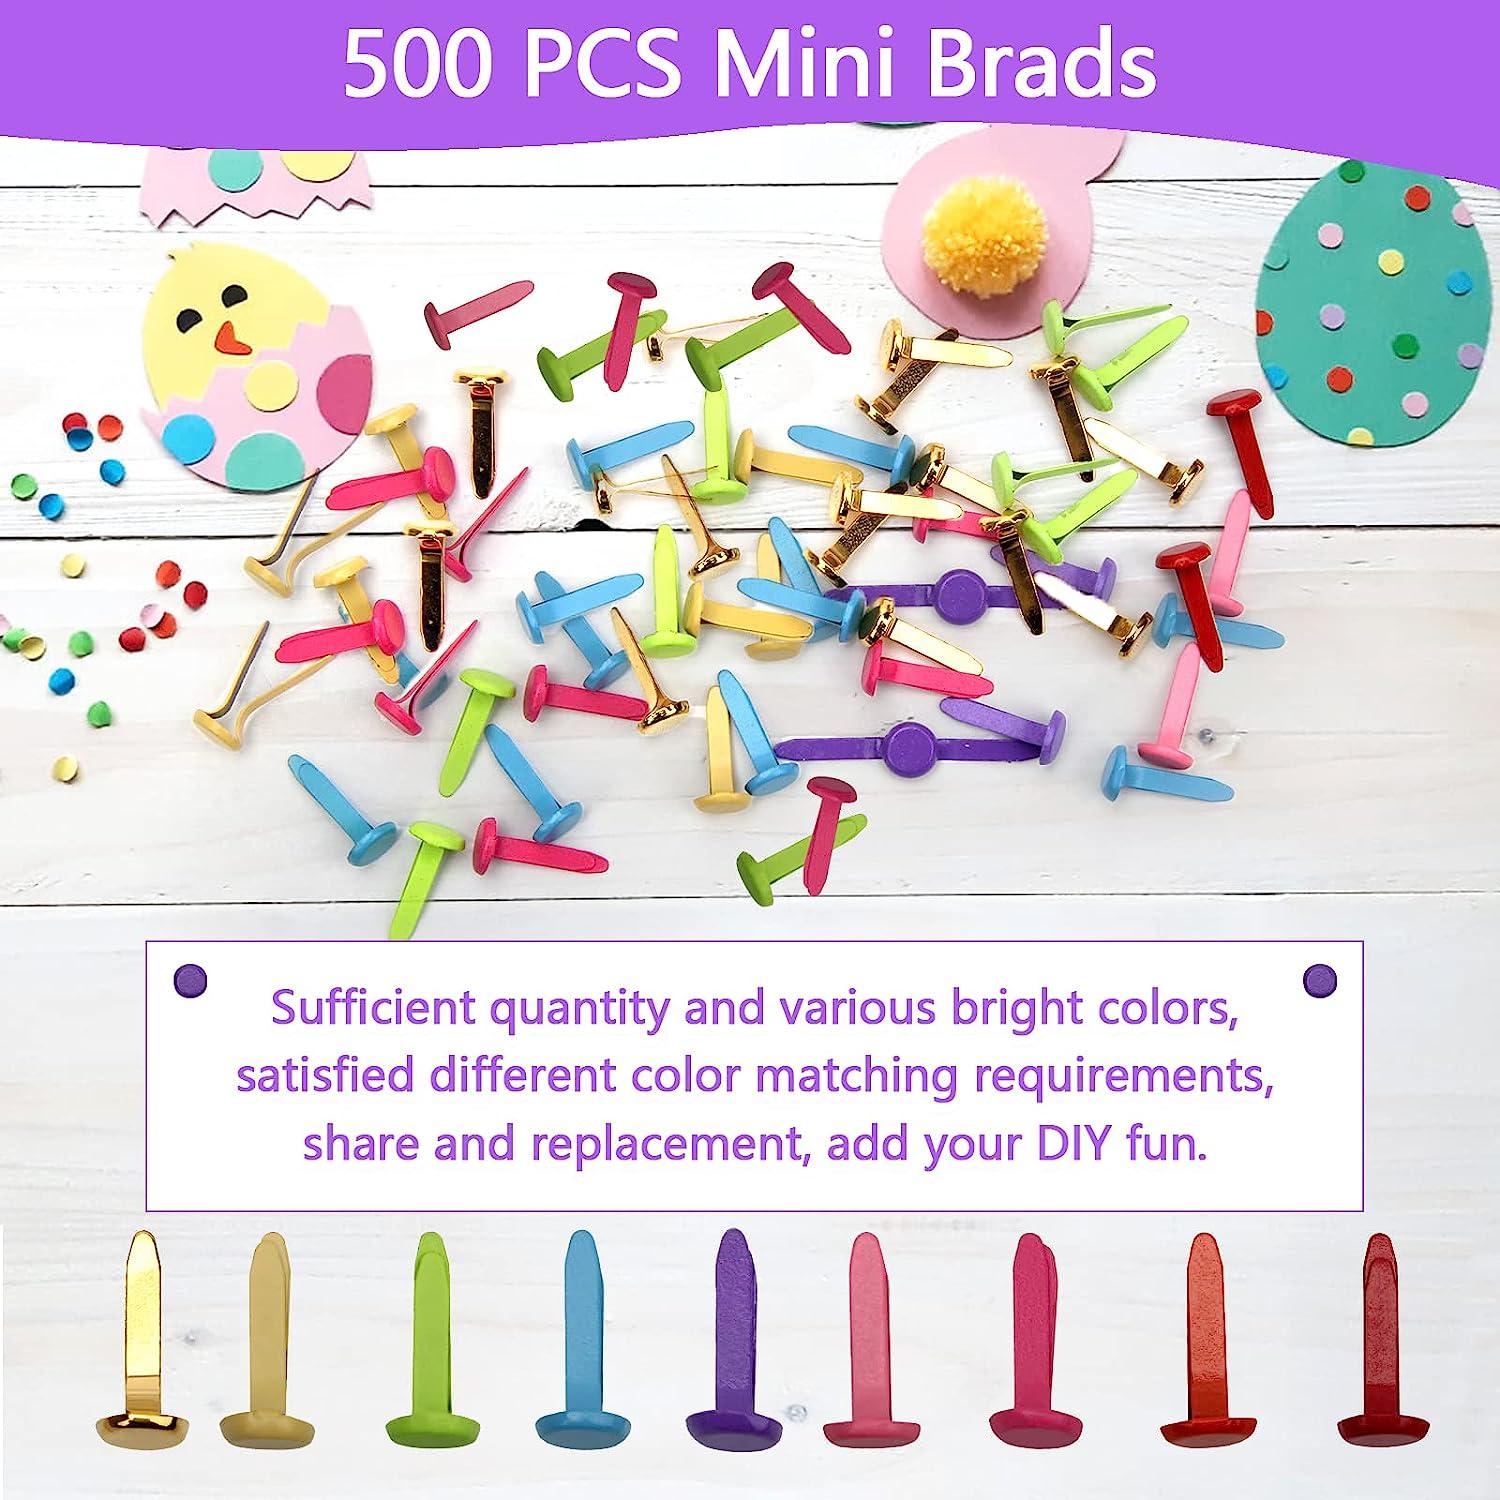 500Pcs Mini Brads for Crafts, Winspeed Colorful Metal Brads for  Scrapbooking Brads, Decorative Paper Fastener Brads for Crafting School DIY  Thumbtacks (8 * 18mm)